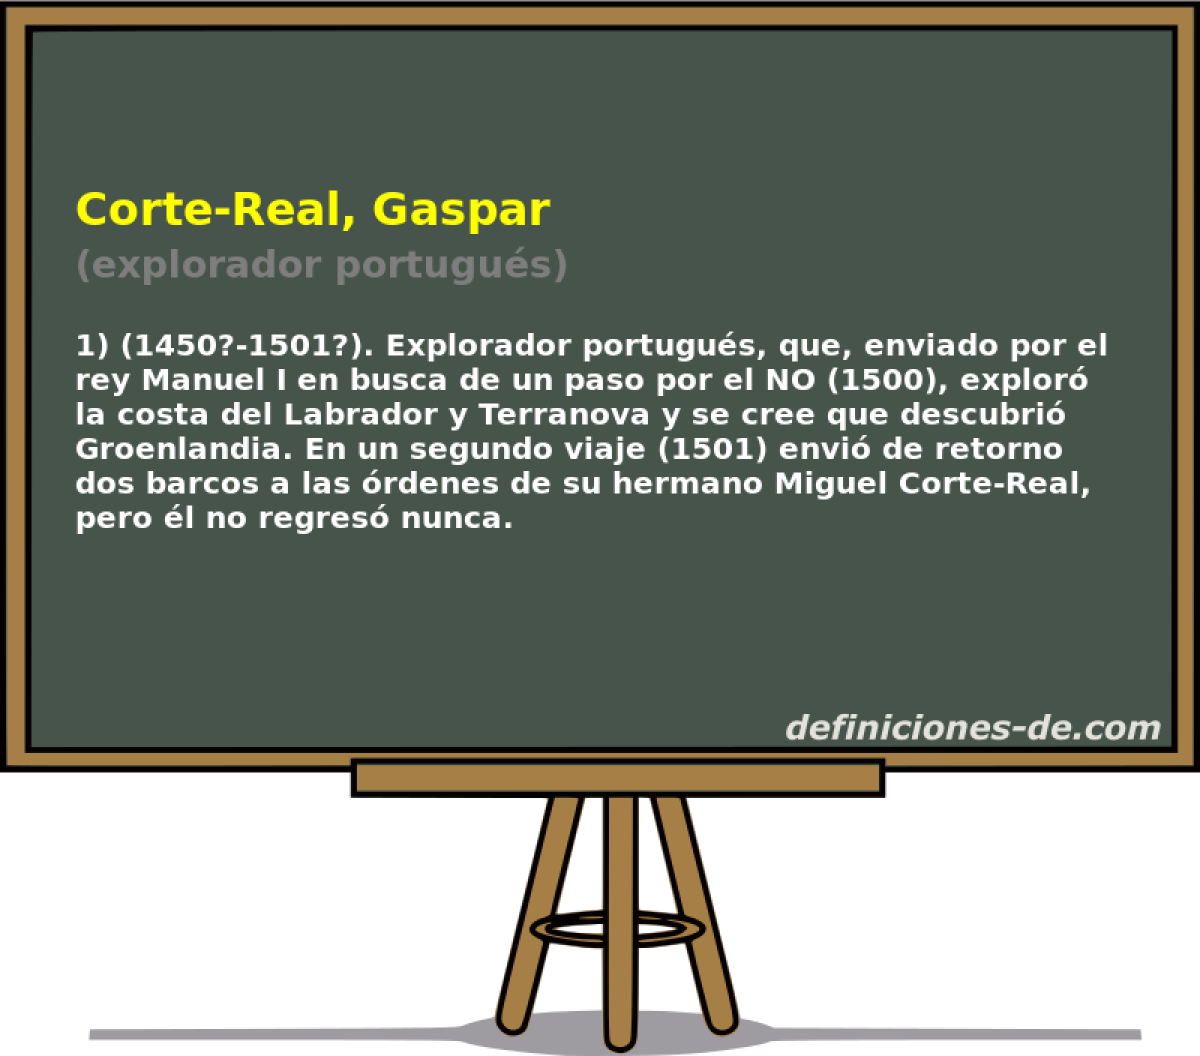 Corte-Real, Gaspar (explorador portugus)